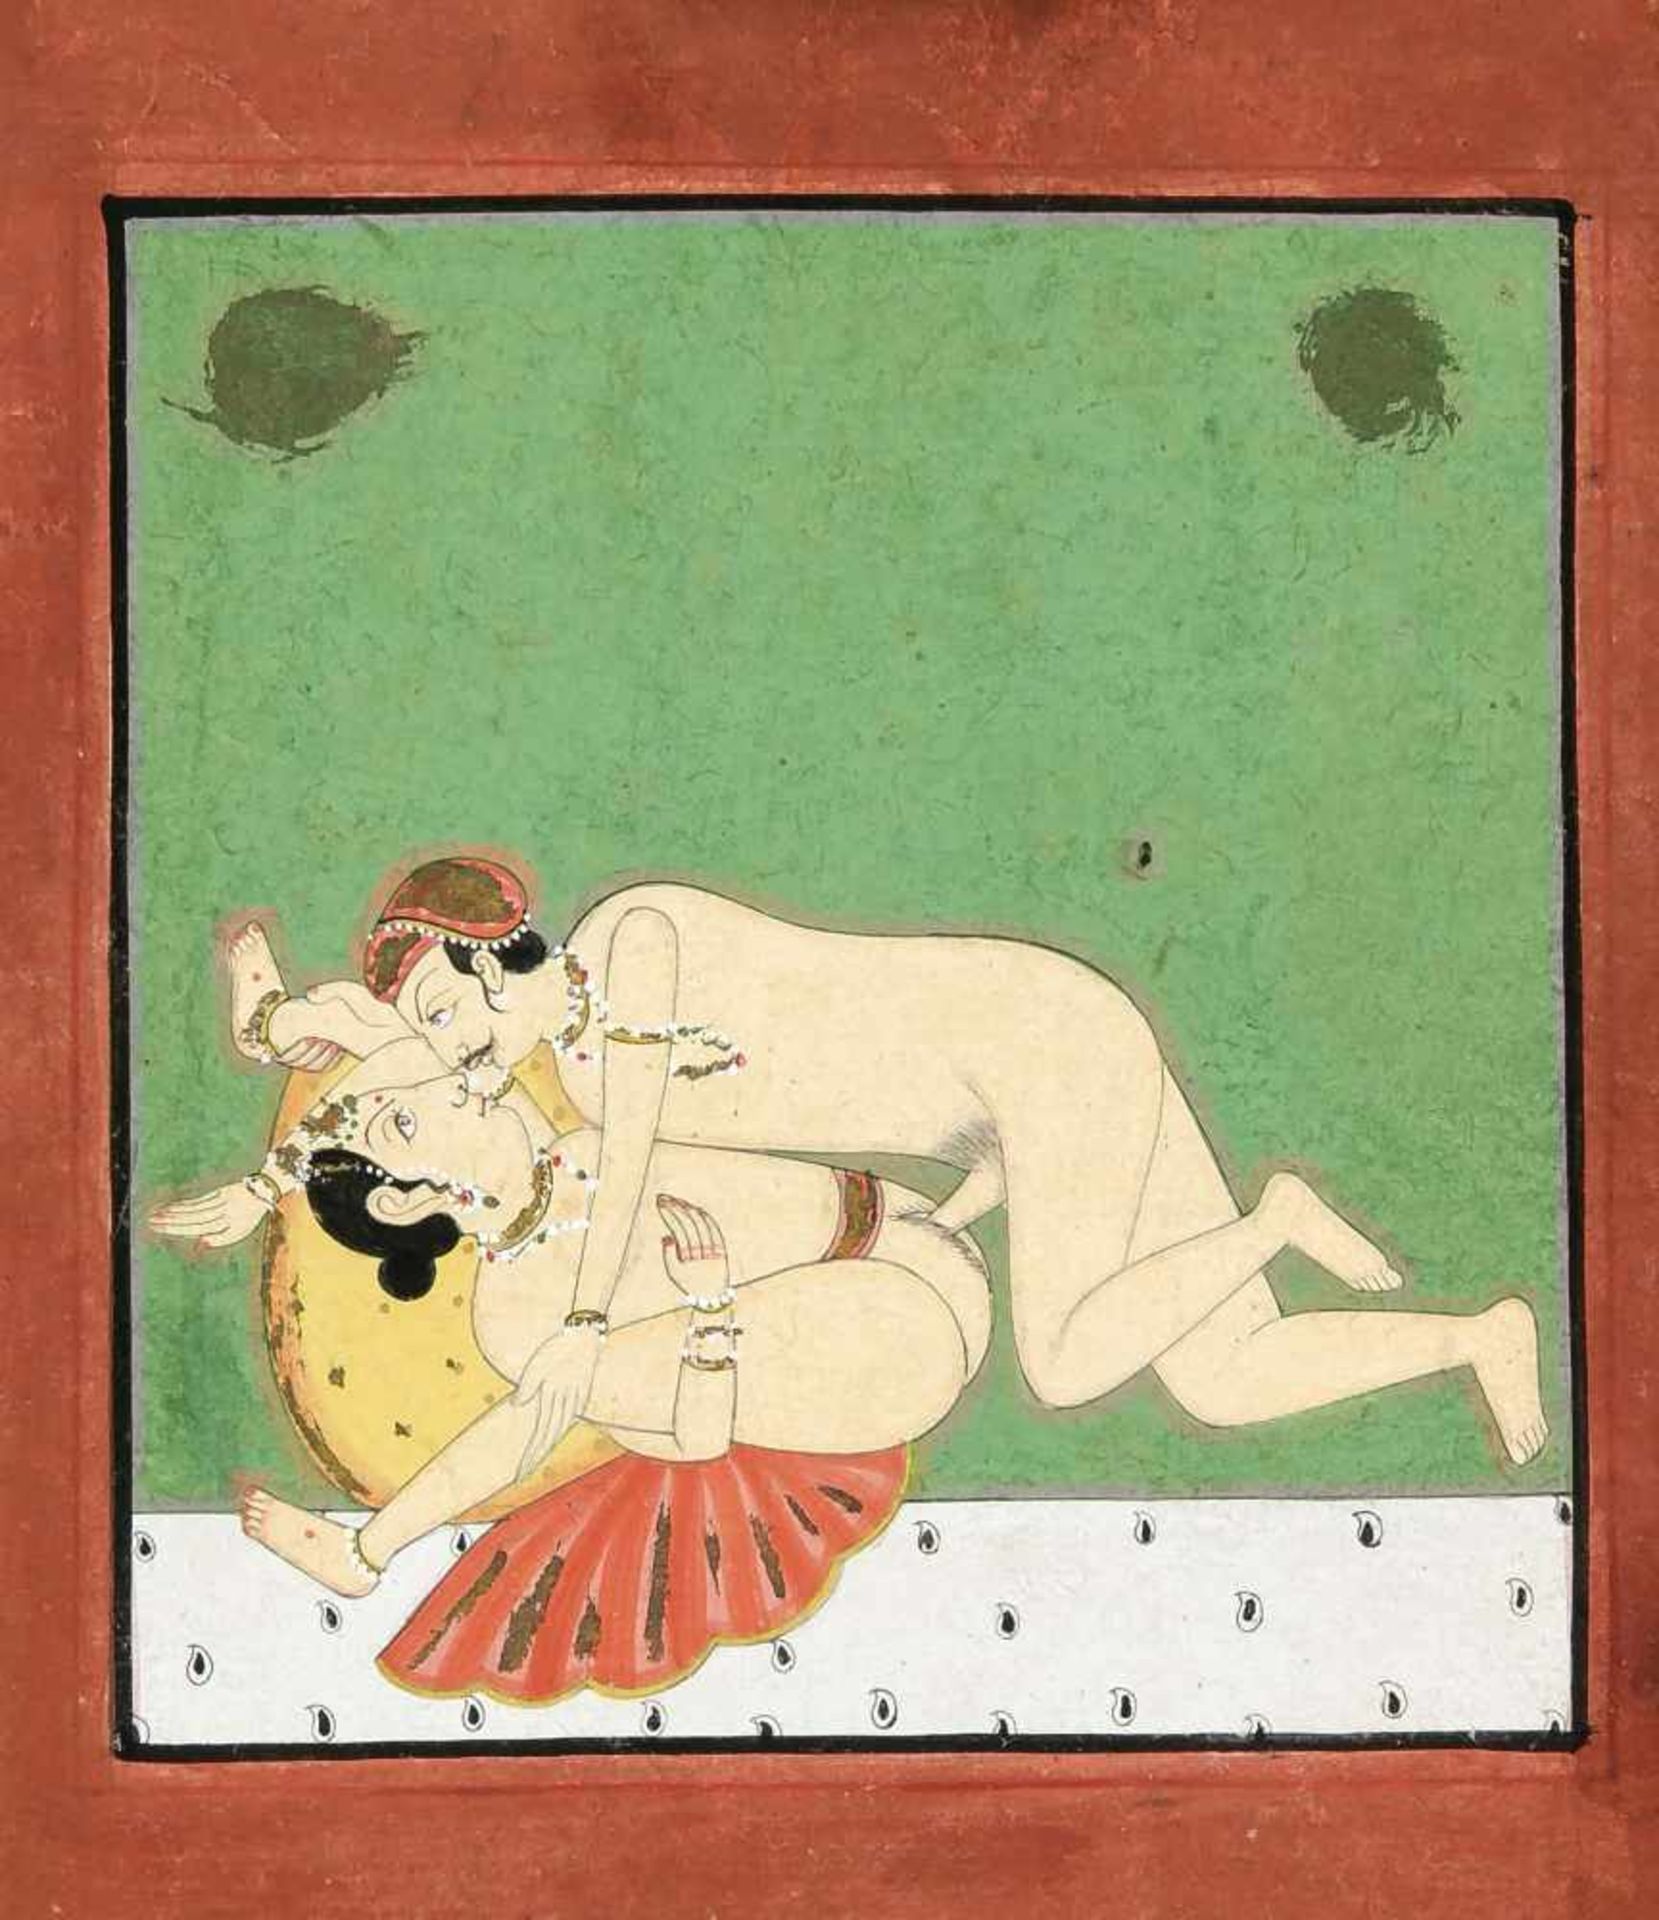 Erotische Malerei, Indien, spätes 19./frühes 20. Jh., polychrome Pigmente auf festem Papier, part.